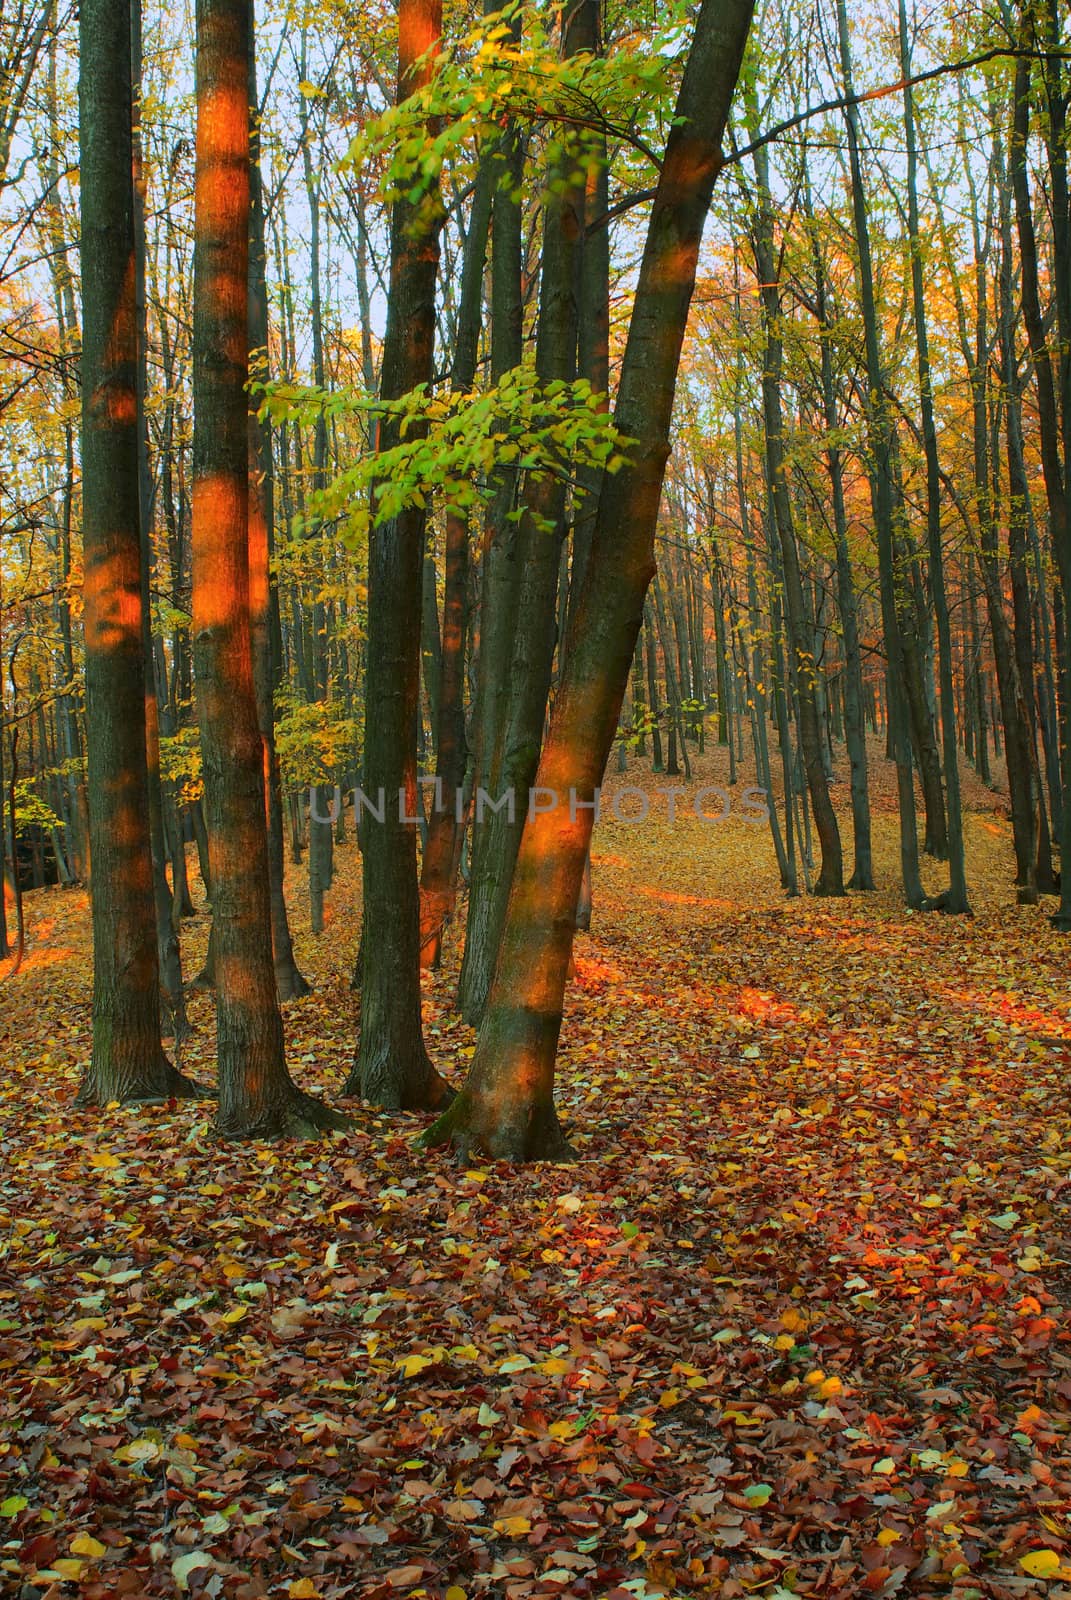 Autumn forest - 2 by Kamensky